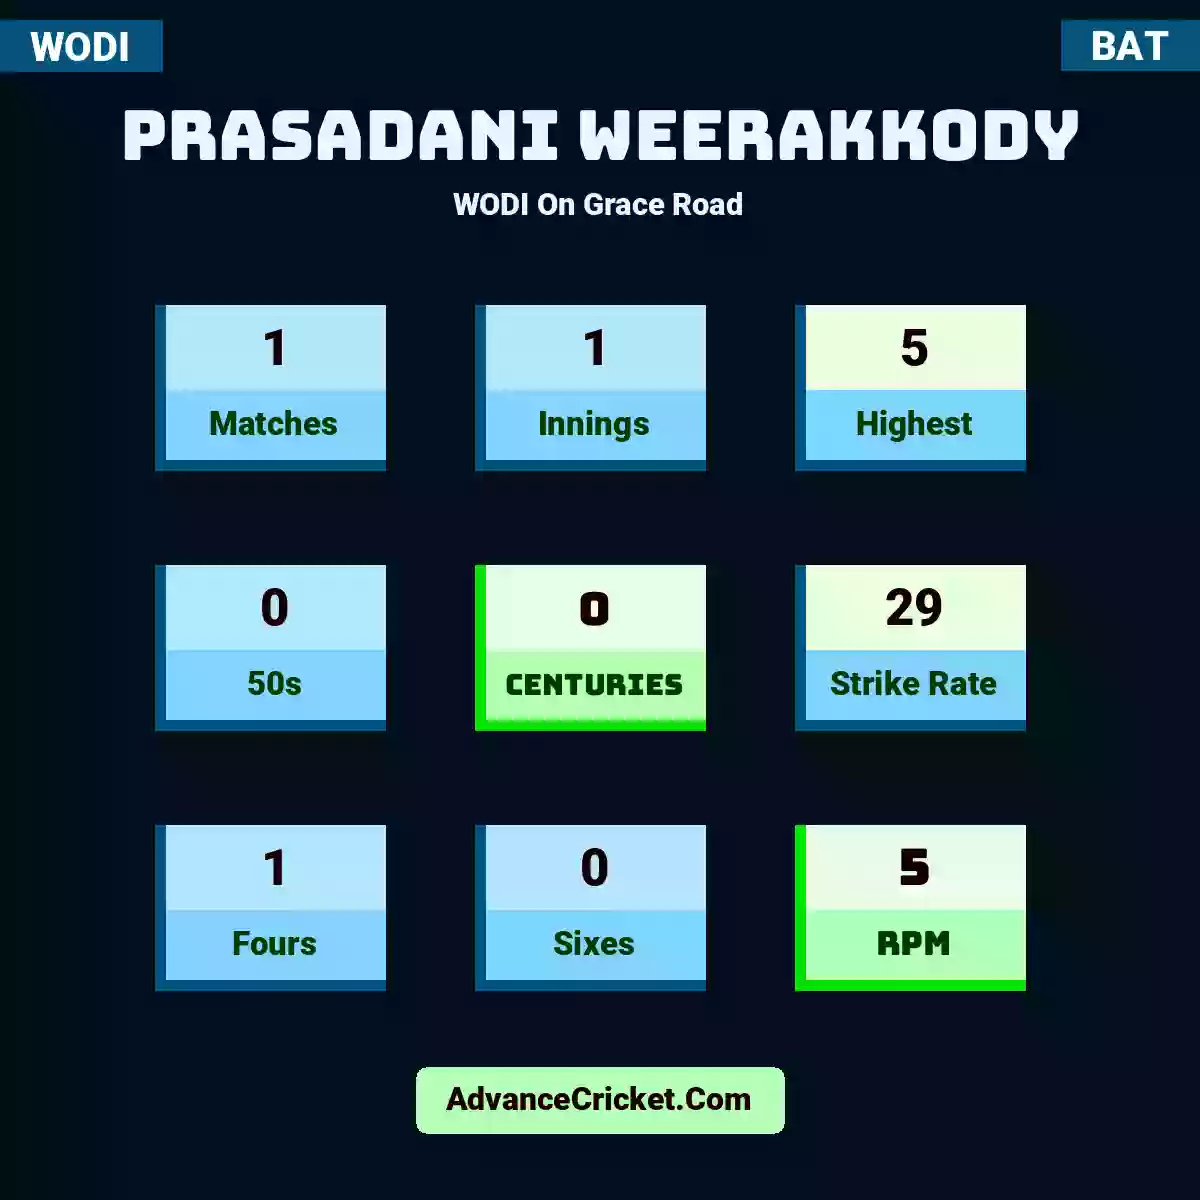 Prasadani Weerakkody WODI  On Grace Road, Prasadani Weerakkody played 1 matches, scored 5 runs as highest, 0 half-centuries, and 0 centuries, with a strike rate of 29. P.Weerakkody hit 1 fours and 0 sixes, with an RPM of 5.